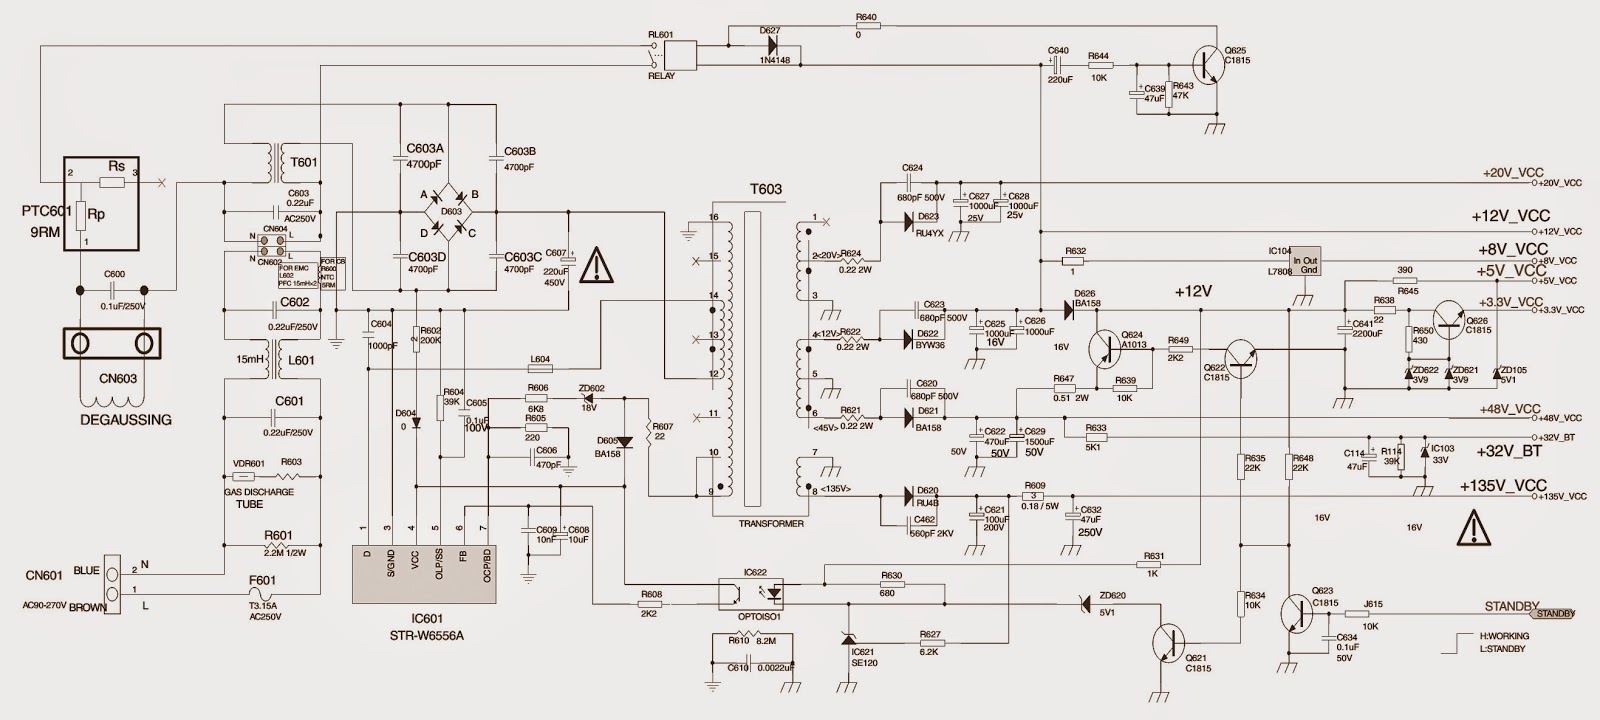 [DIAGRAM] Sharp Crt Tv Circuit Diagram